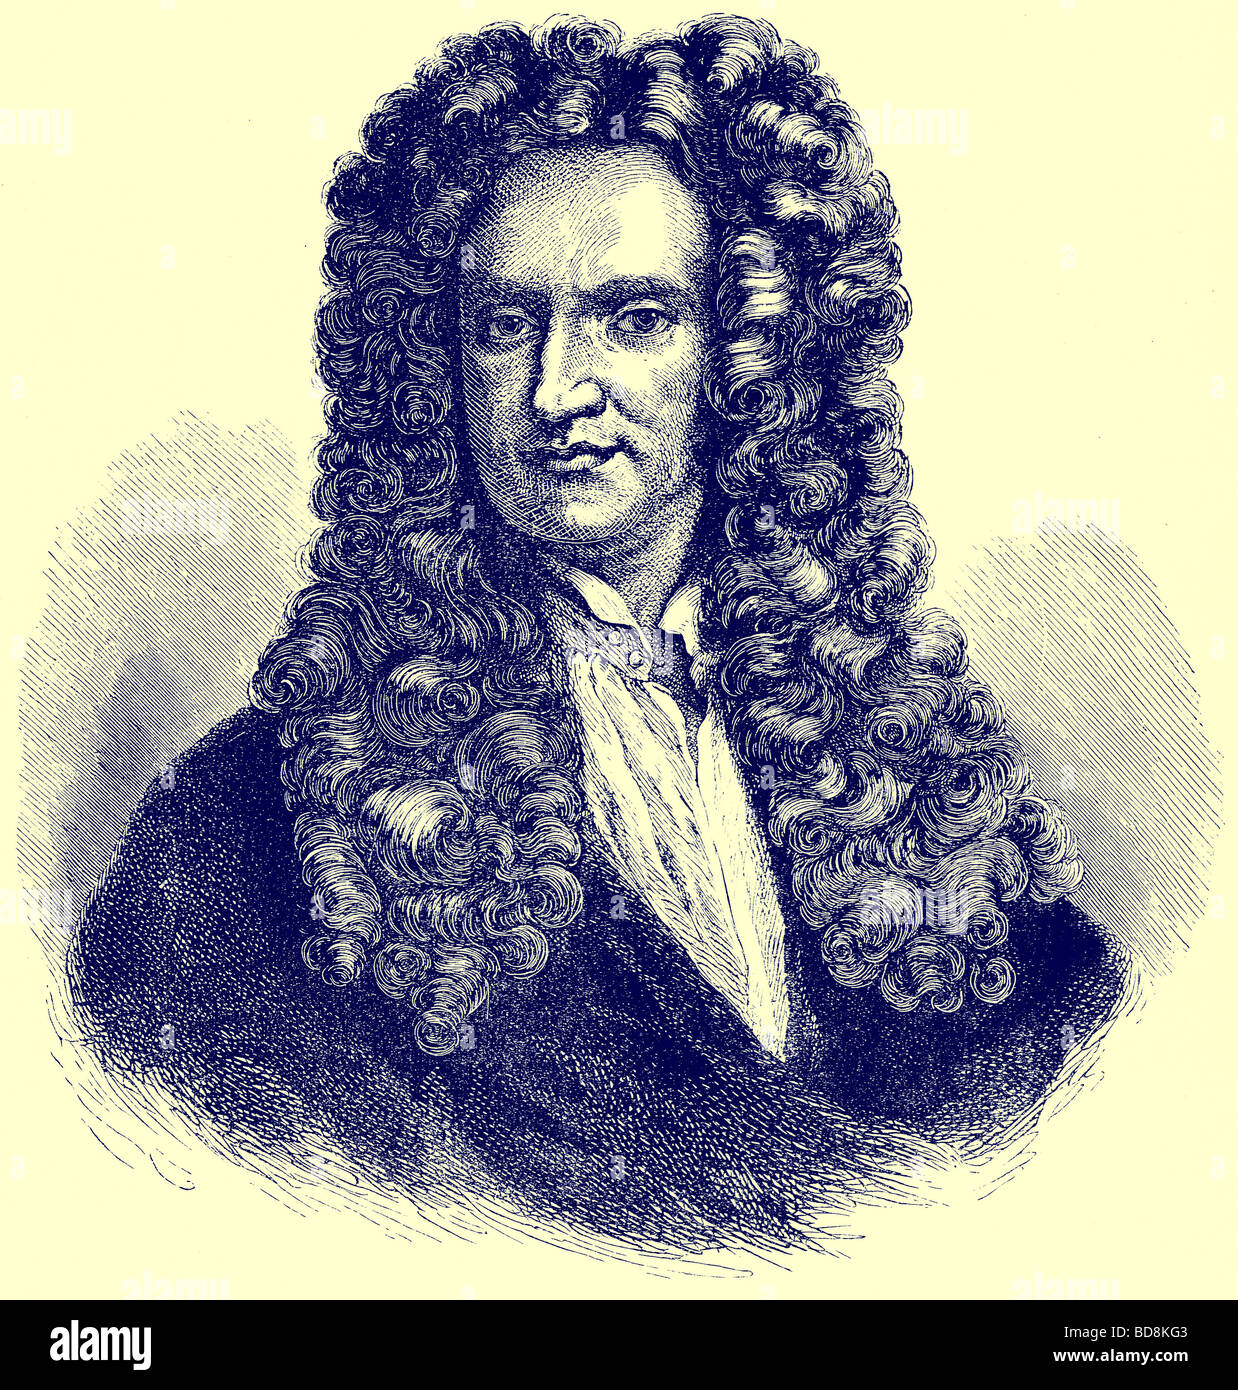 Sir Isaac Newton Stock Illustrations  83 Sir Isaac Newton Stock  Illustrations Vectors  Clipart  Dreamstime